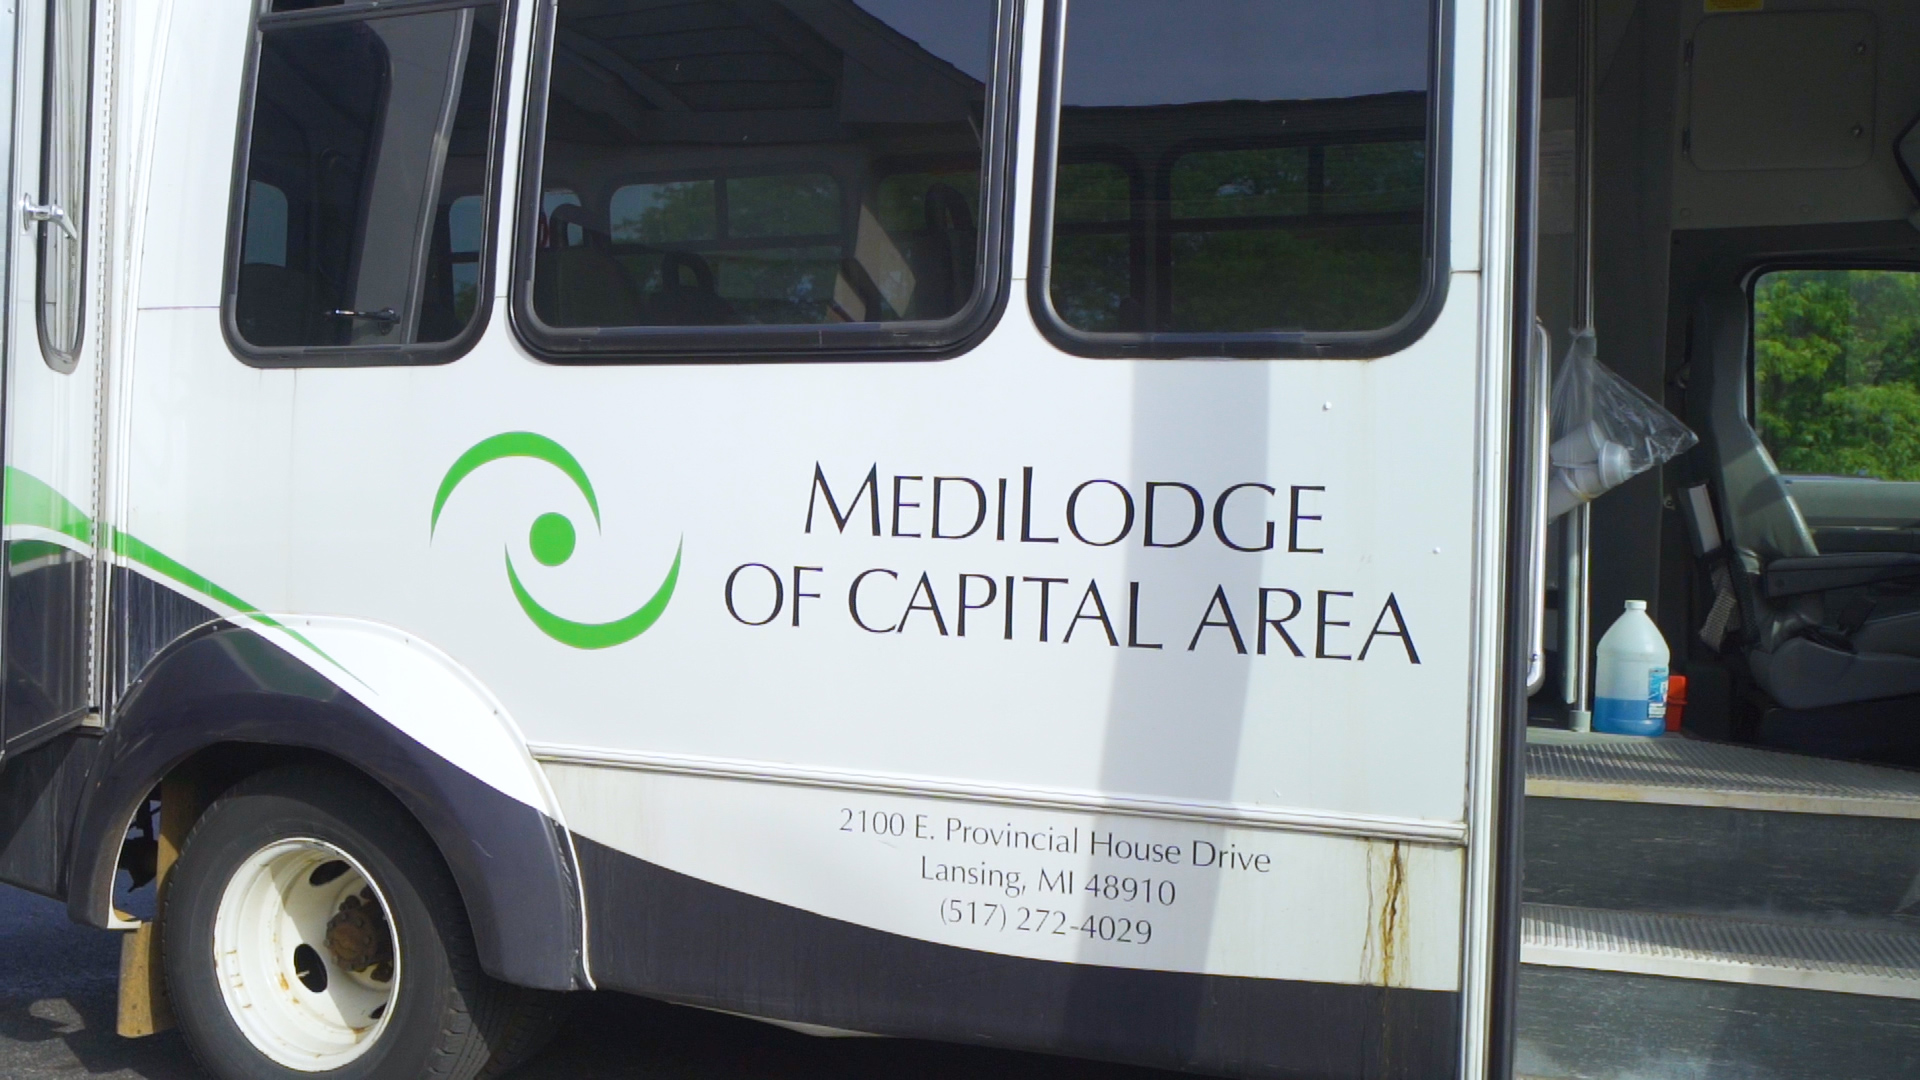 MediLodge of Capital Area